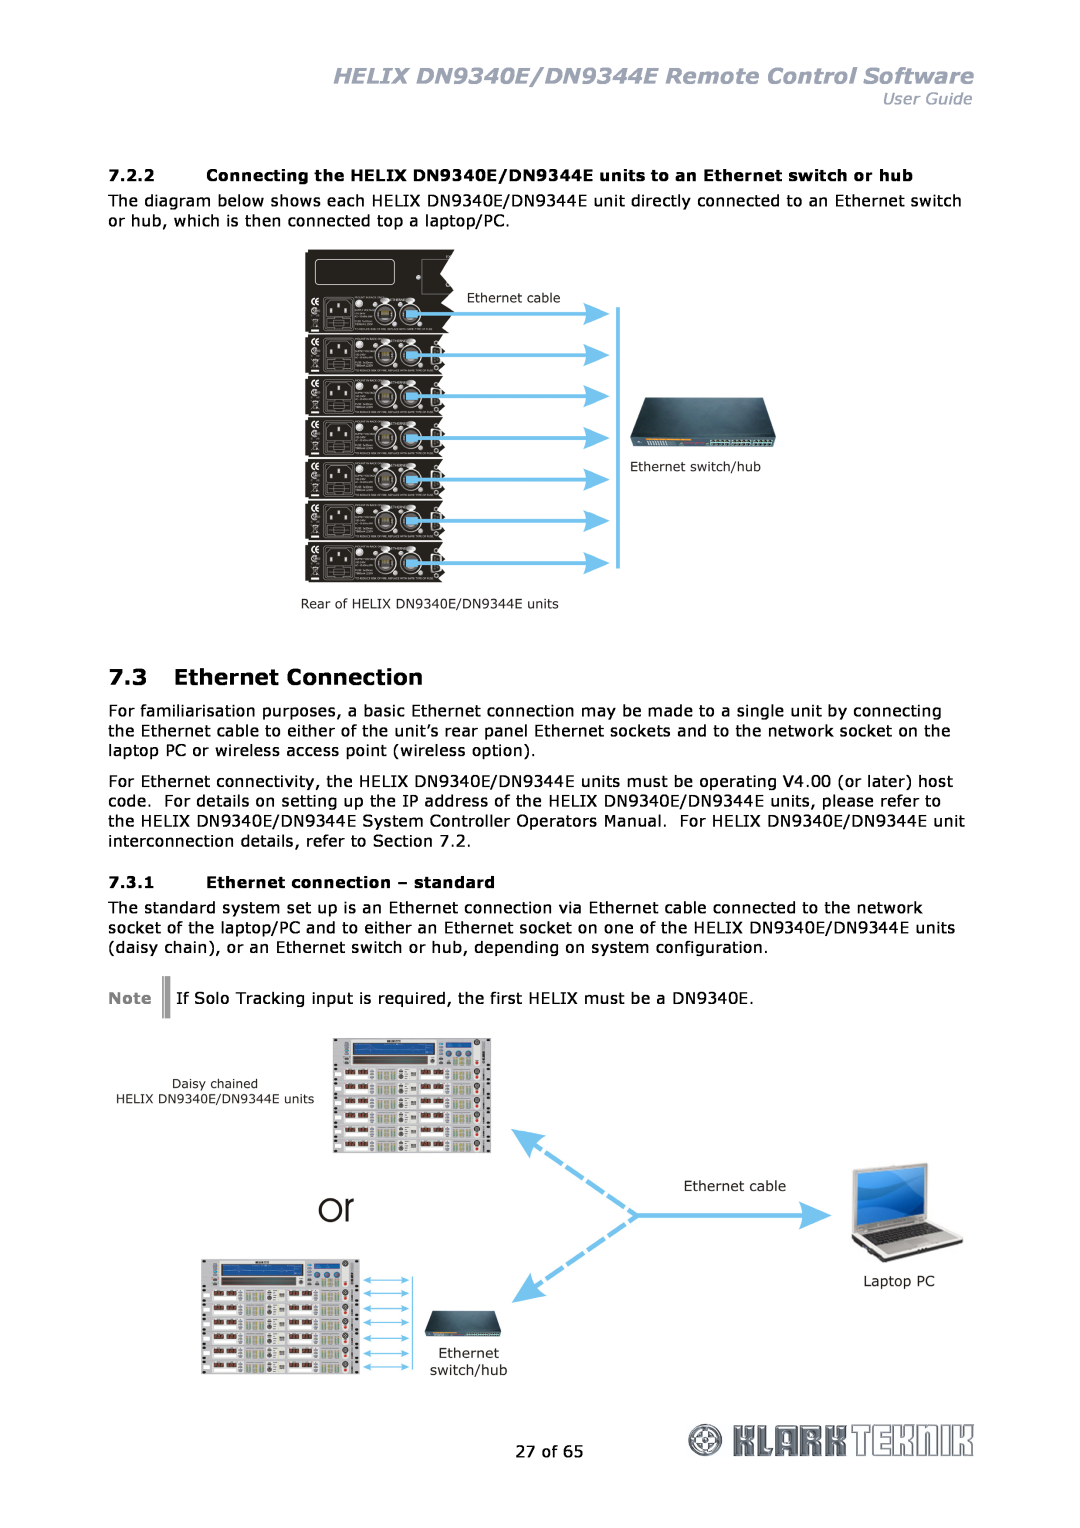 Klark Teknik manual Ethernet Connection, Ethernet connection - standard, HELIX DN9340E/DN9344E Remote Control Software 